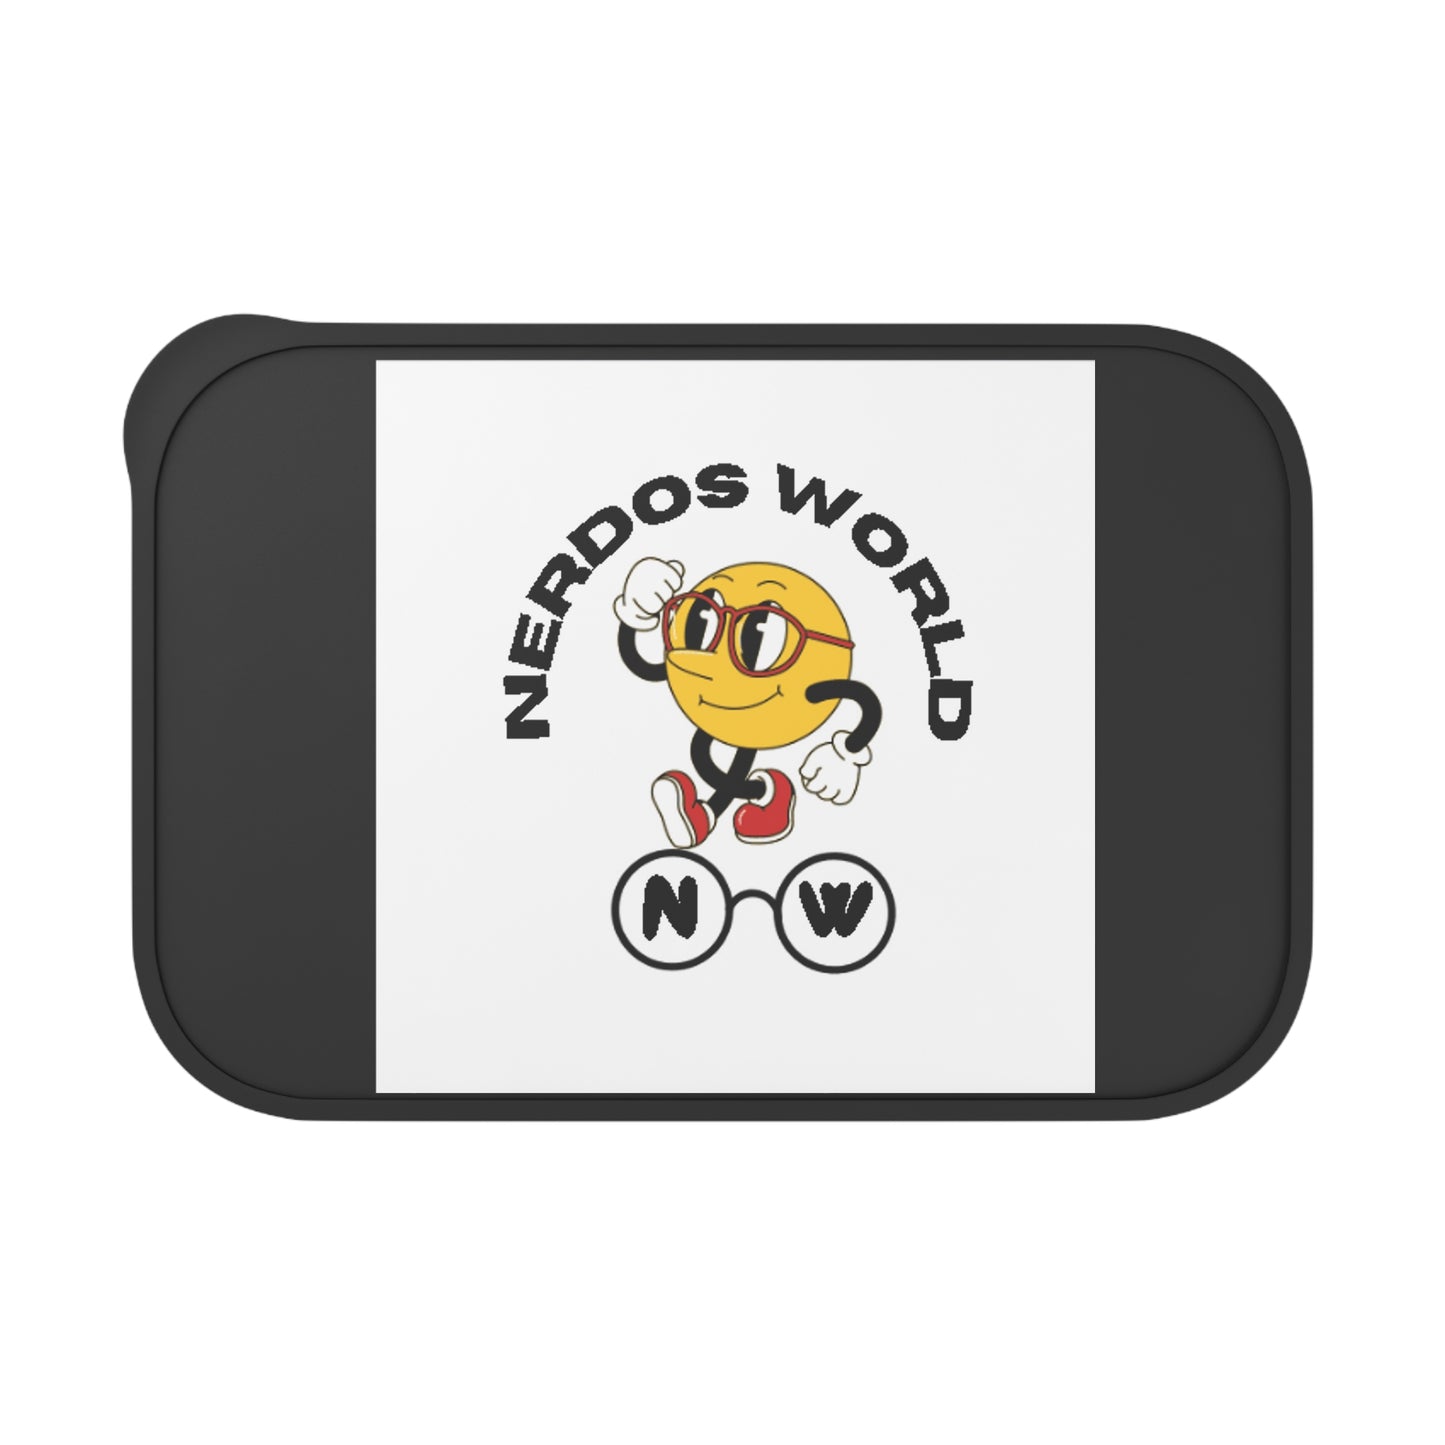 Nerdos World Bento Box with Band and Utensils